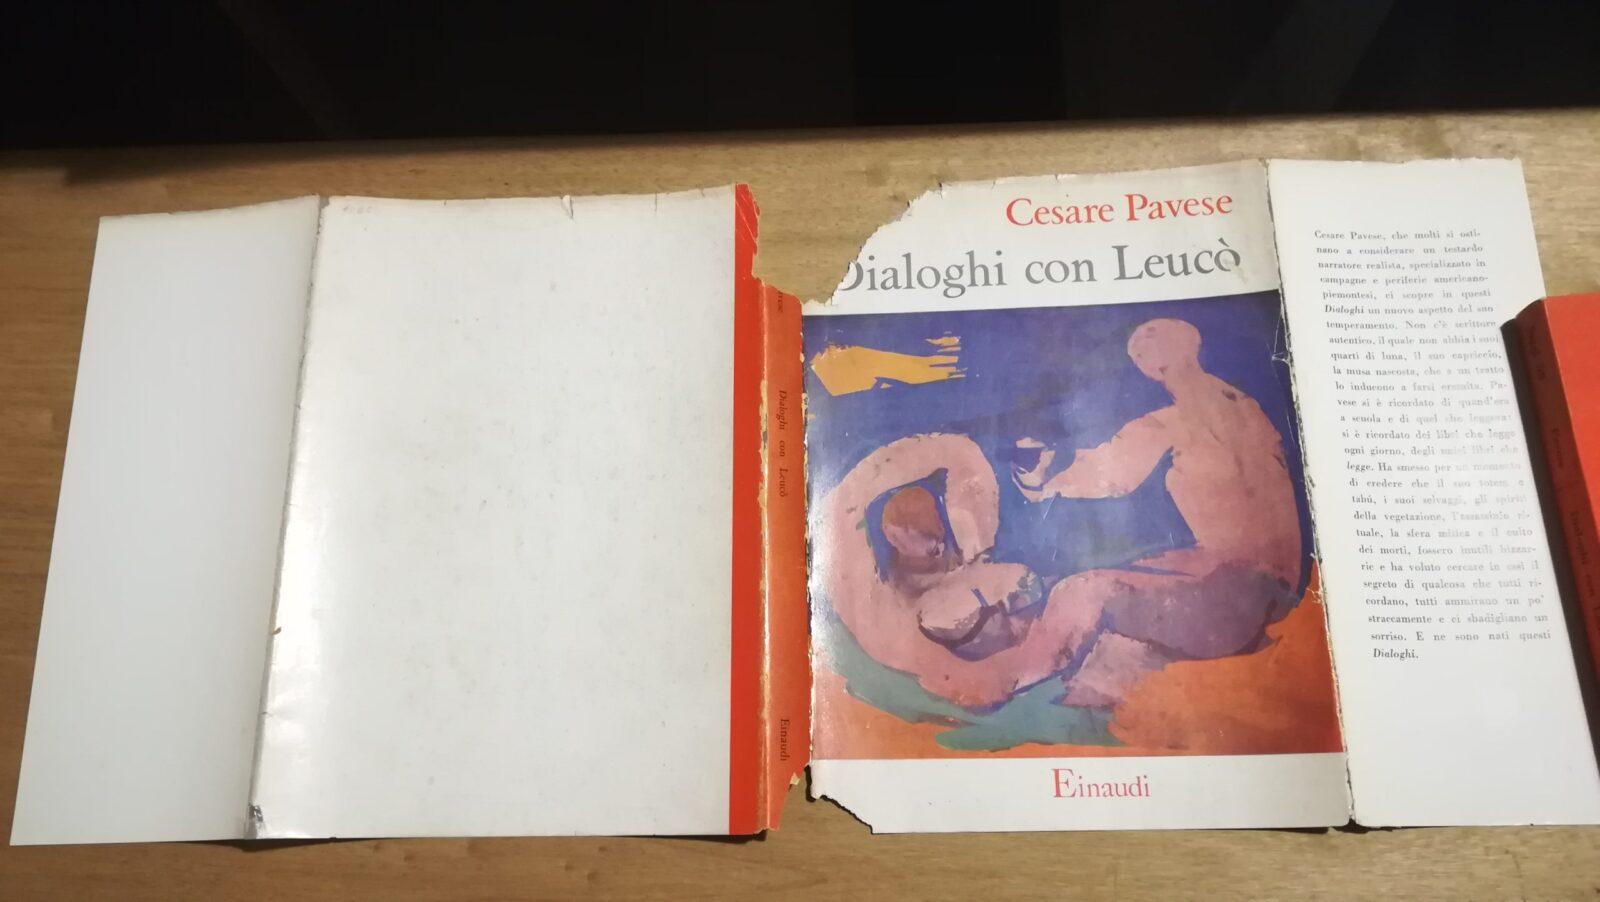 Cesare Pavese - Dialoghi con Leucò - Einaudi - Libreria Utopia Pratica